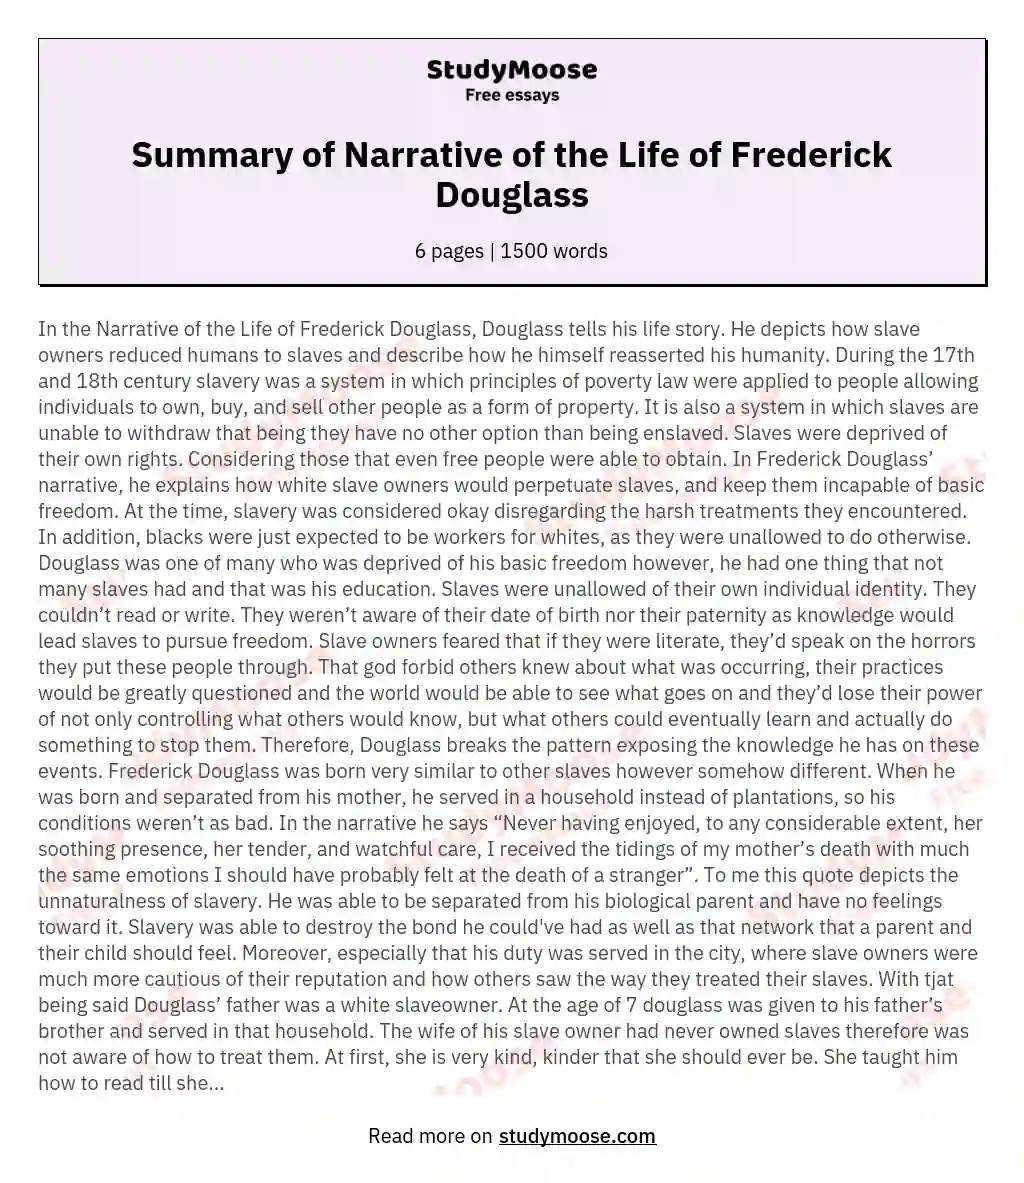 Summary of Narrative of the Life of Frederick Douglass essay